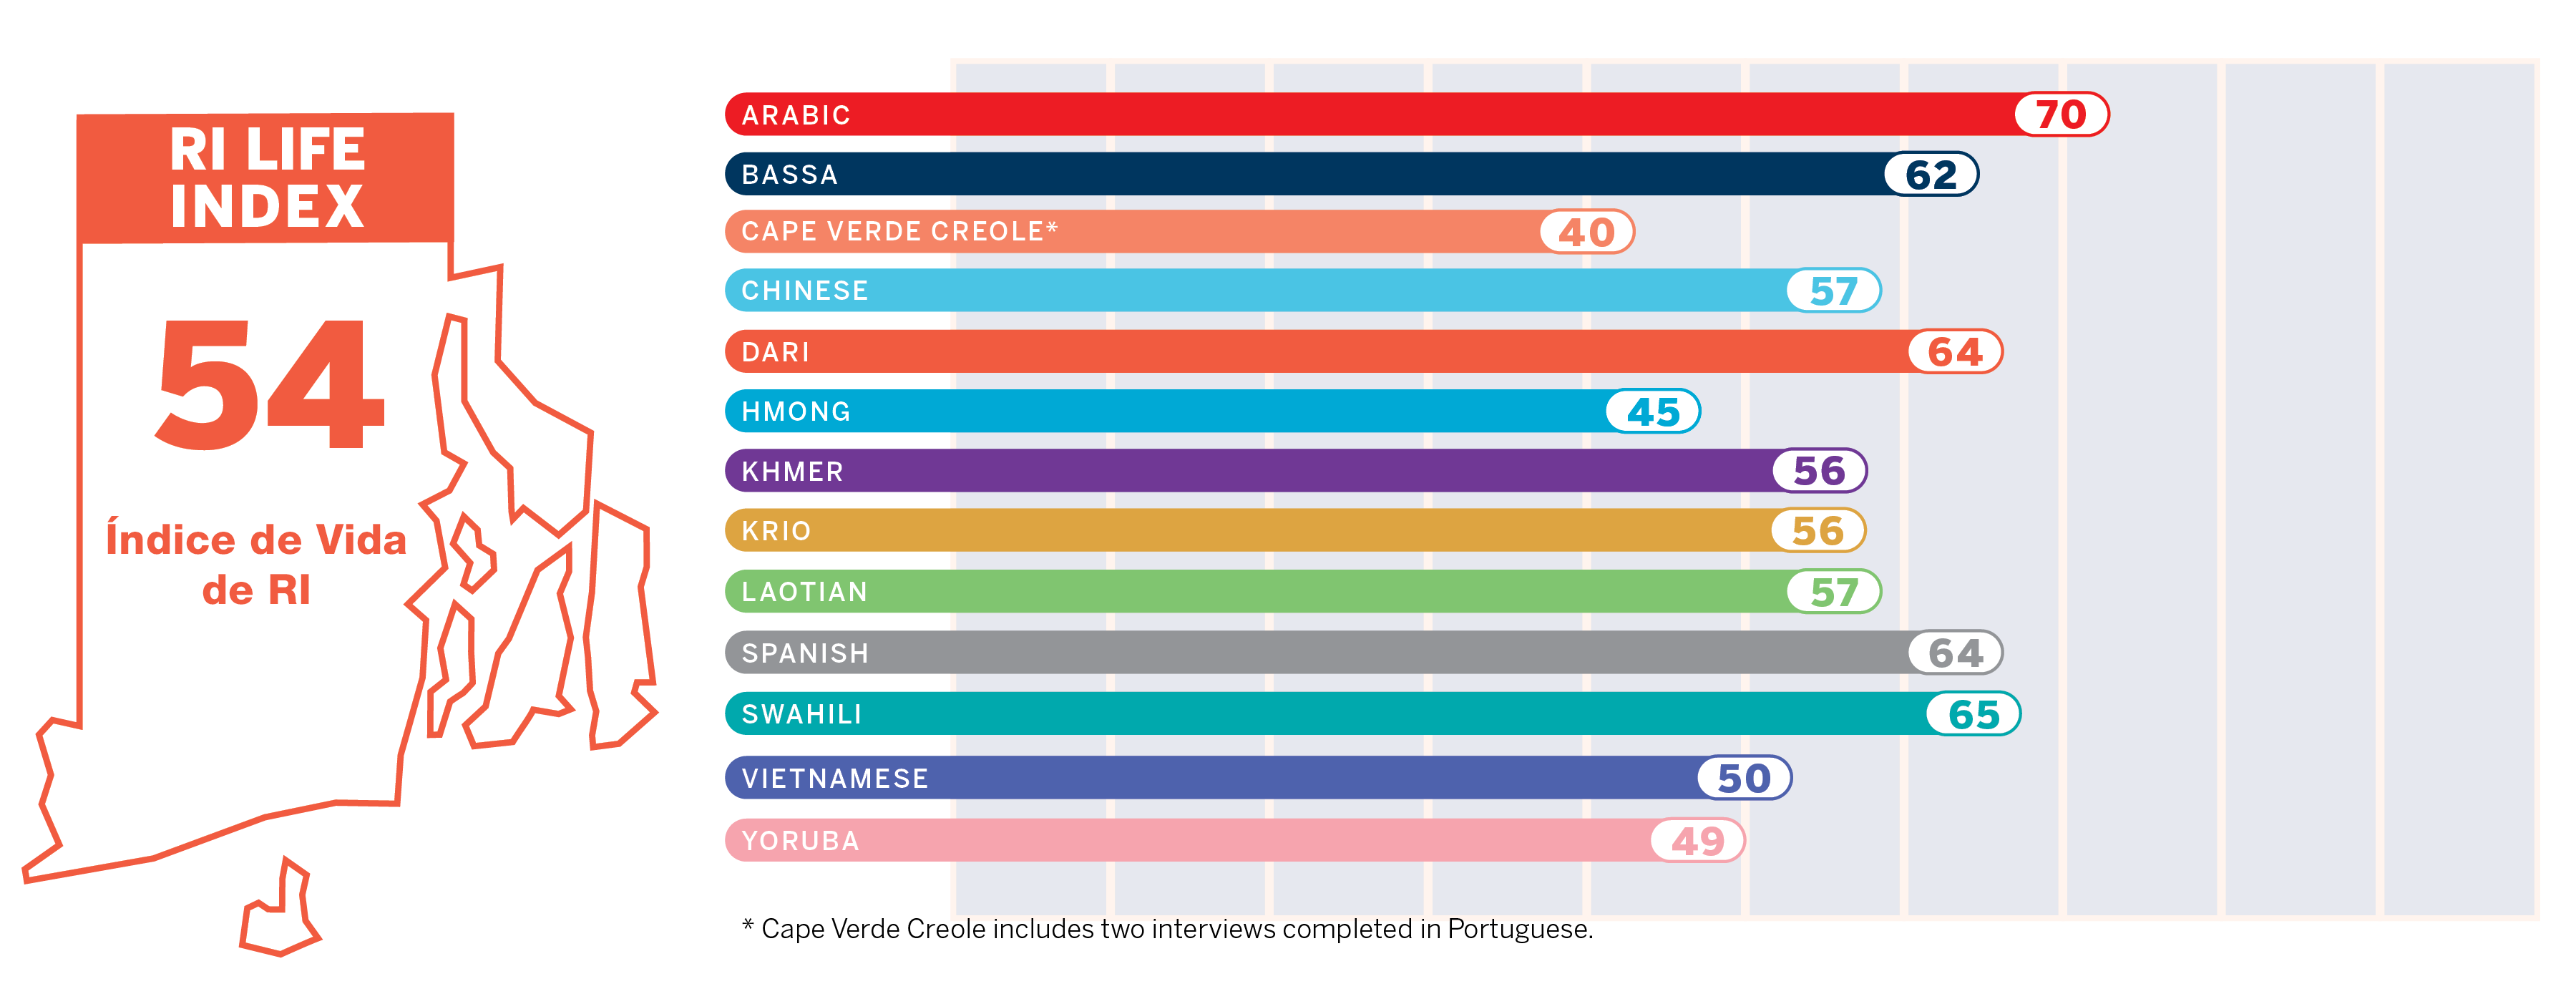 Overall RI Life Index CBO Score Result: 54; Arabic: 70, Bassa: 62, Cape Verde Creole: 40, Chinese: 57, Dari: 64, Hmong: 45, Khmer: 56, Krio: 56, Laotian: 57, Spanish: 64, Swahili: 65, Vietnamese: 50, Yoruba: 49